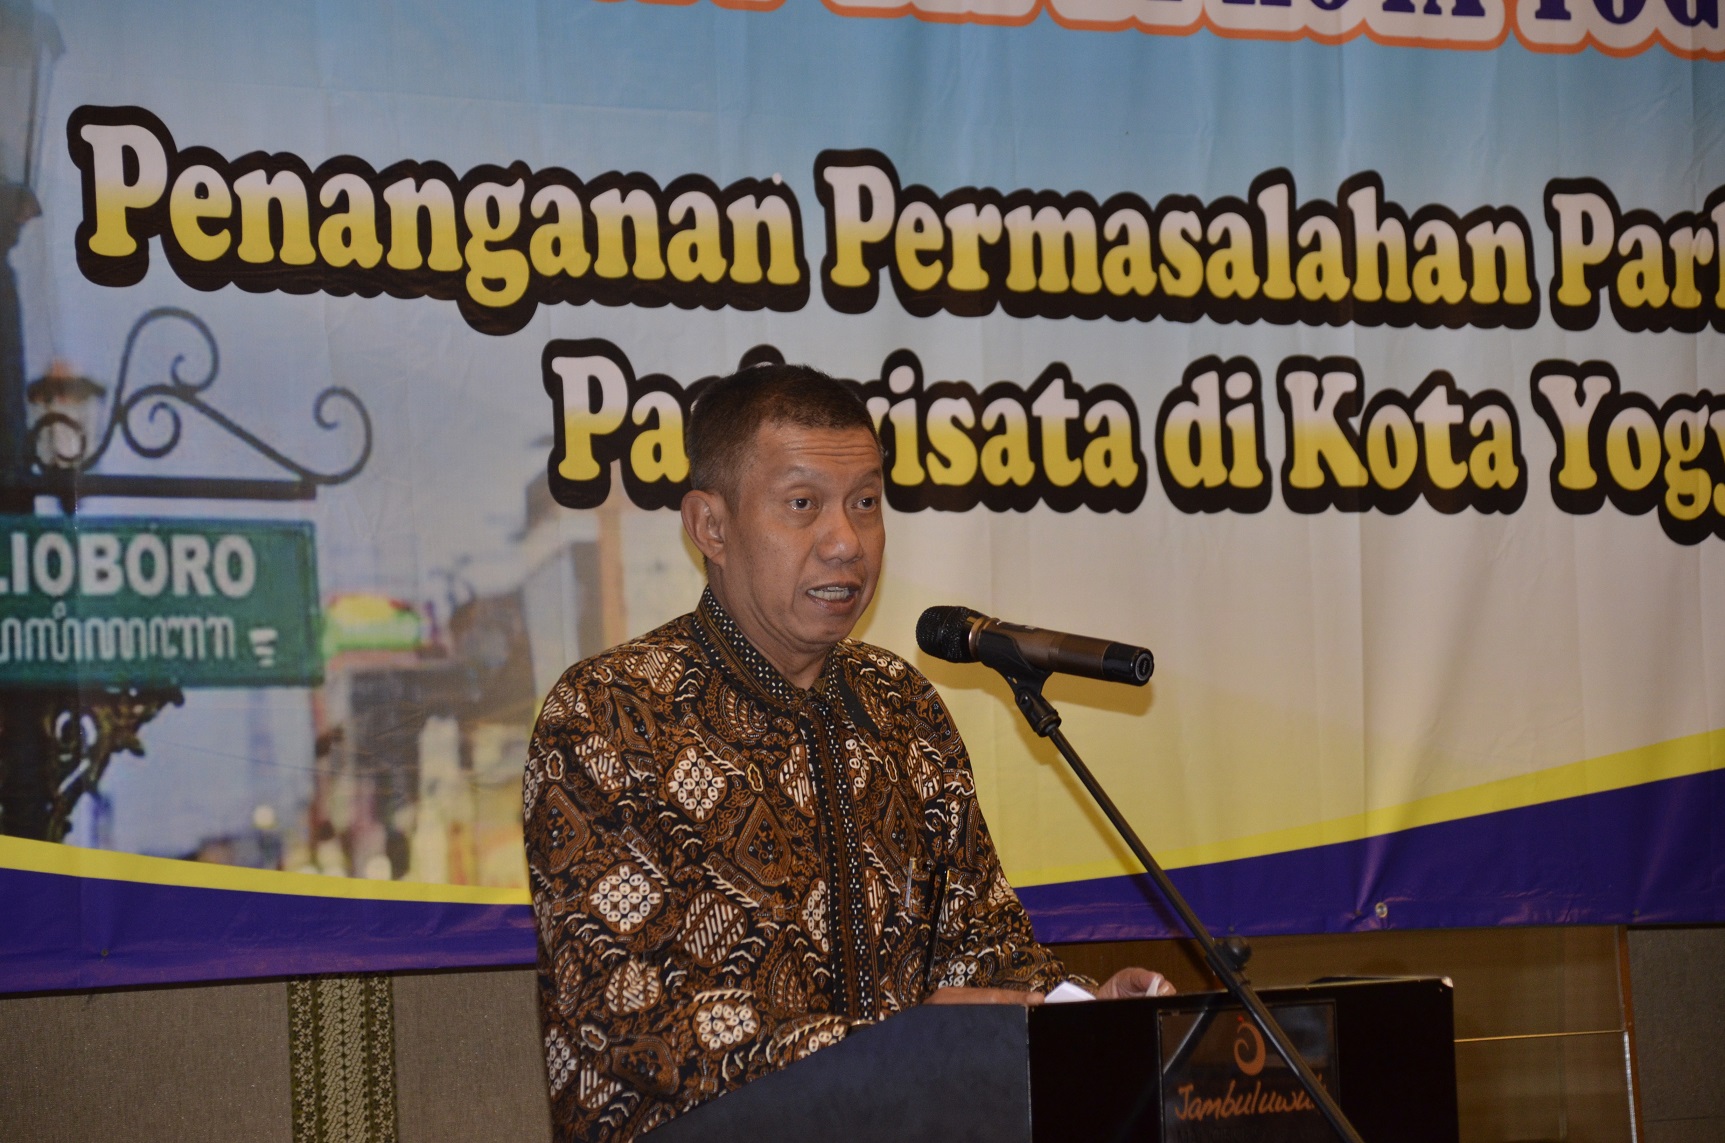 Walikota Yogyakarta : Jukir Nuthuk ditindak